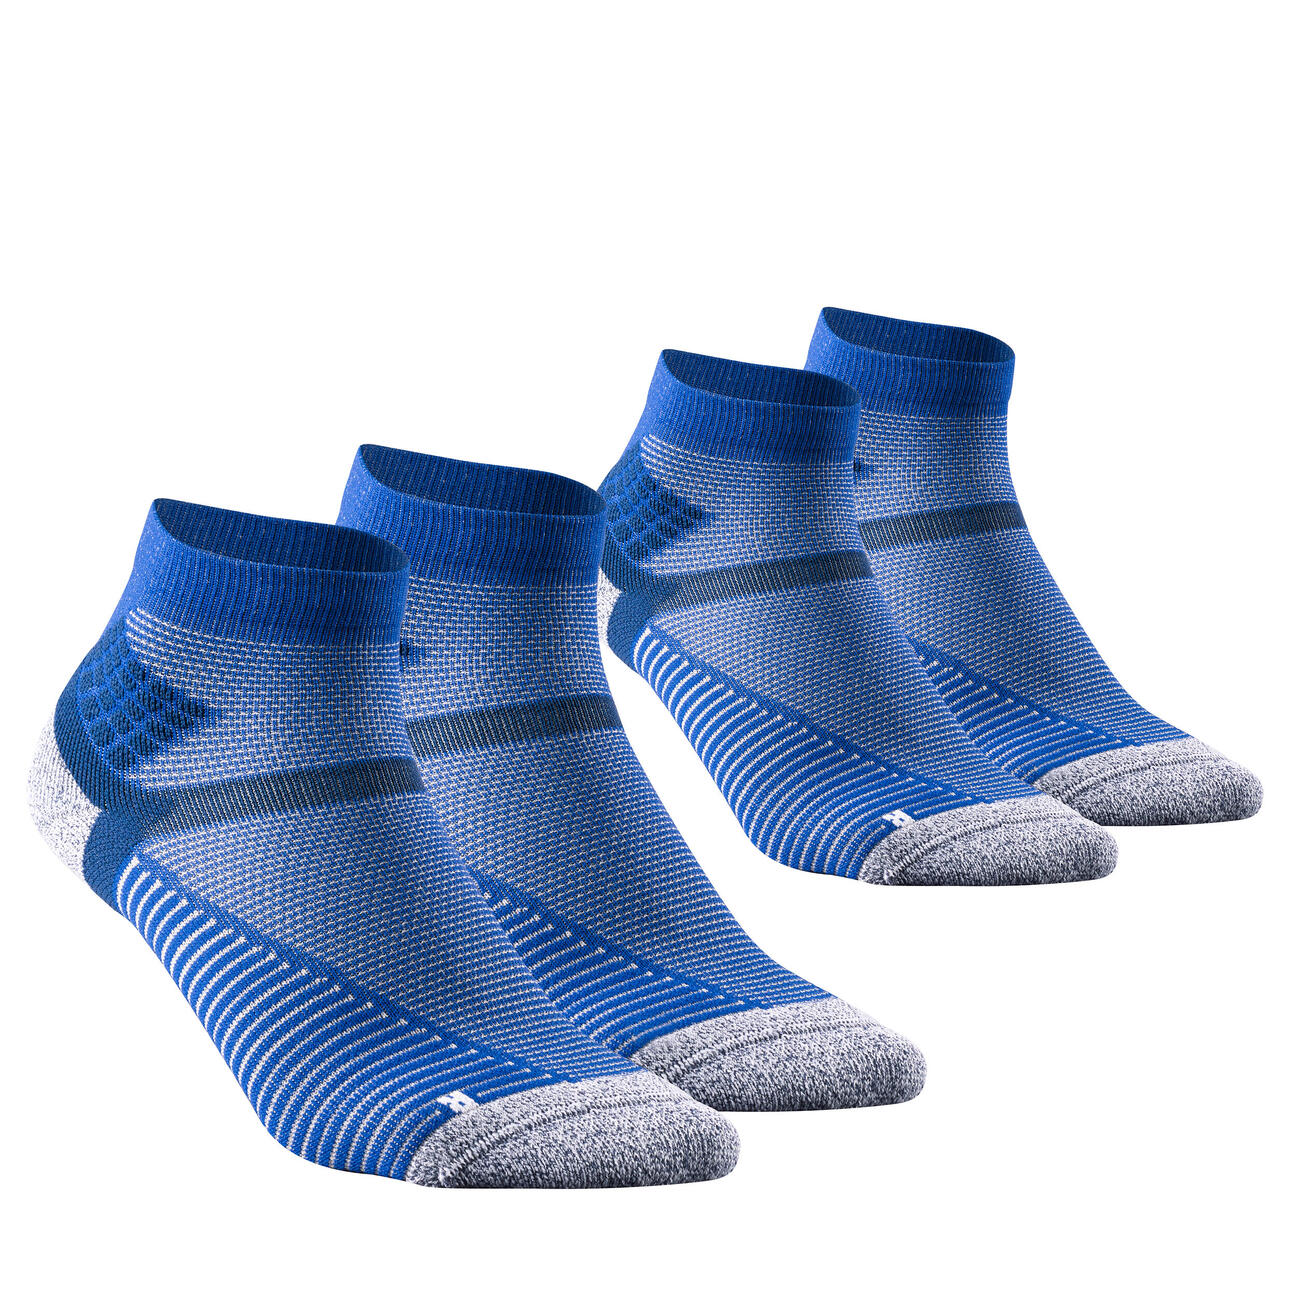 Hiking socks - MH500 Mid x2 pairs Quechua - Decathlon